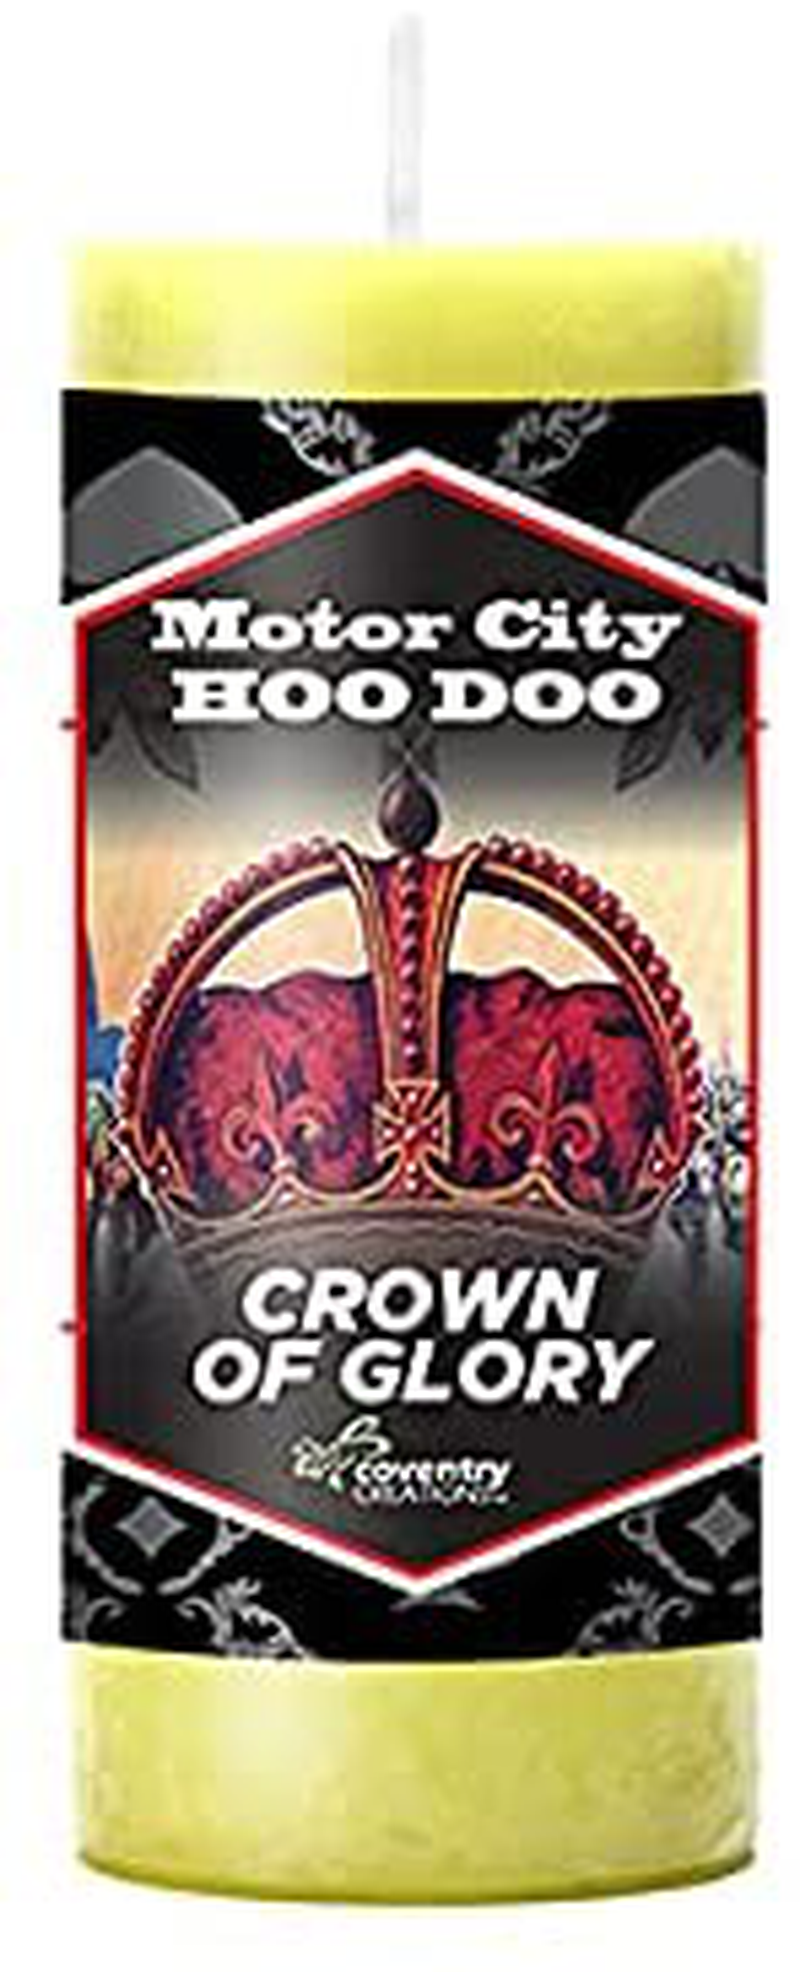 Motor City Hoo Doo Crown of Glory Candle